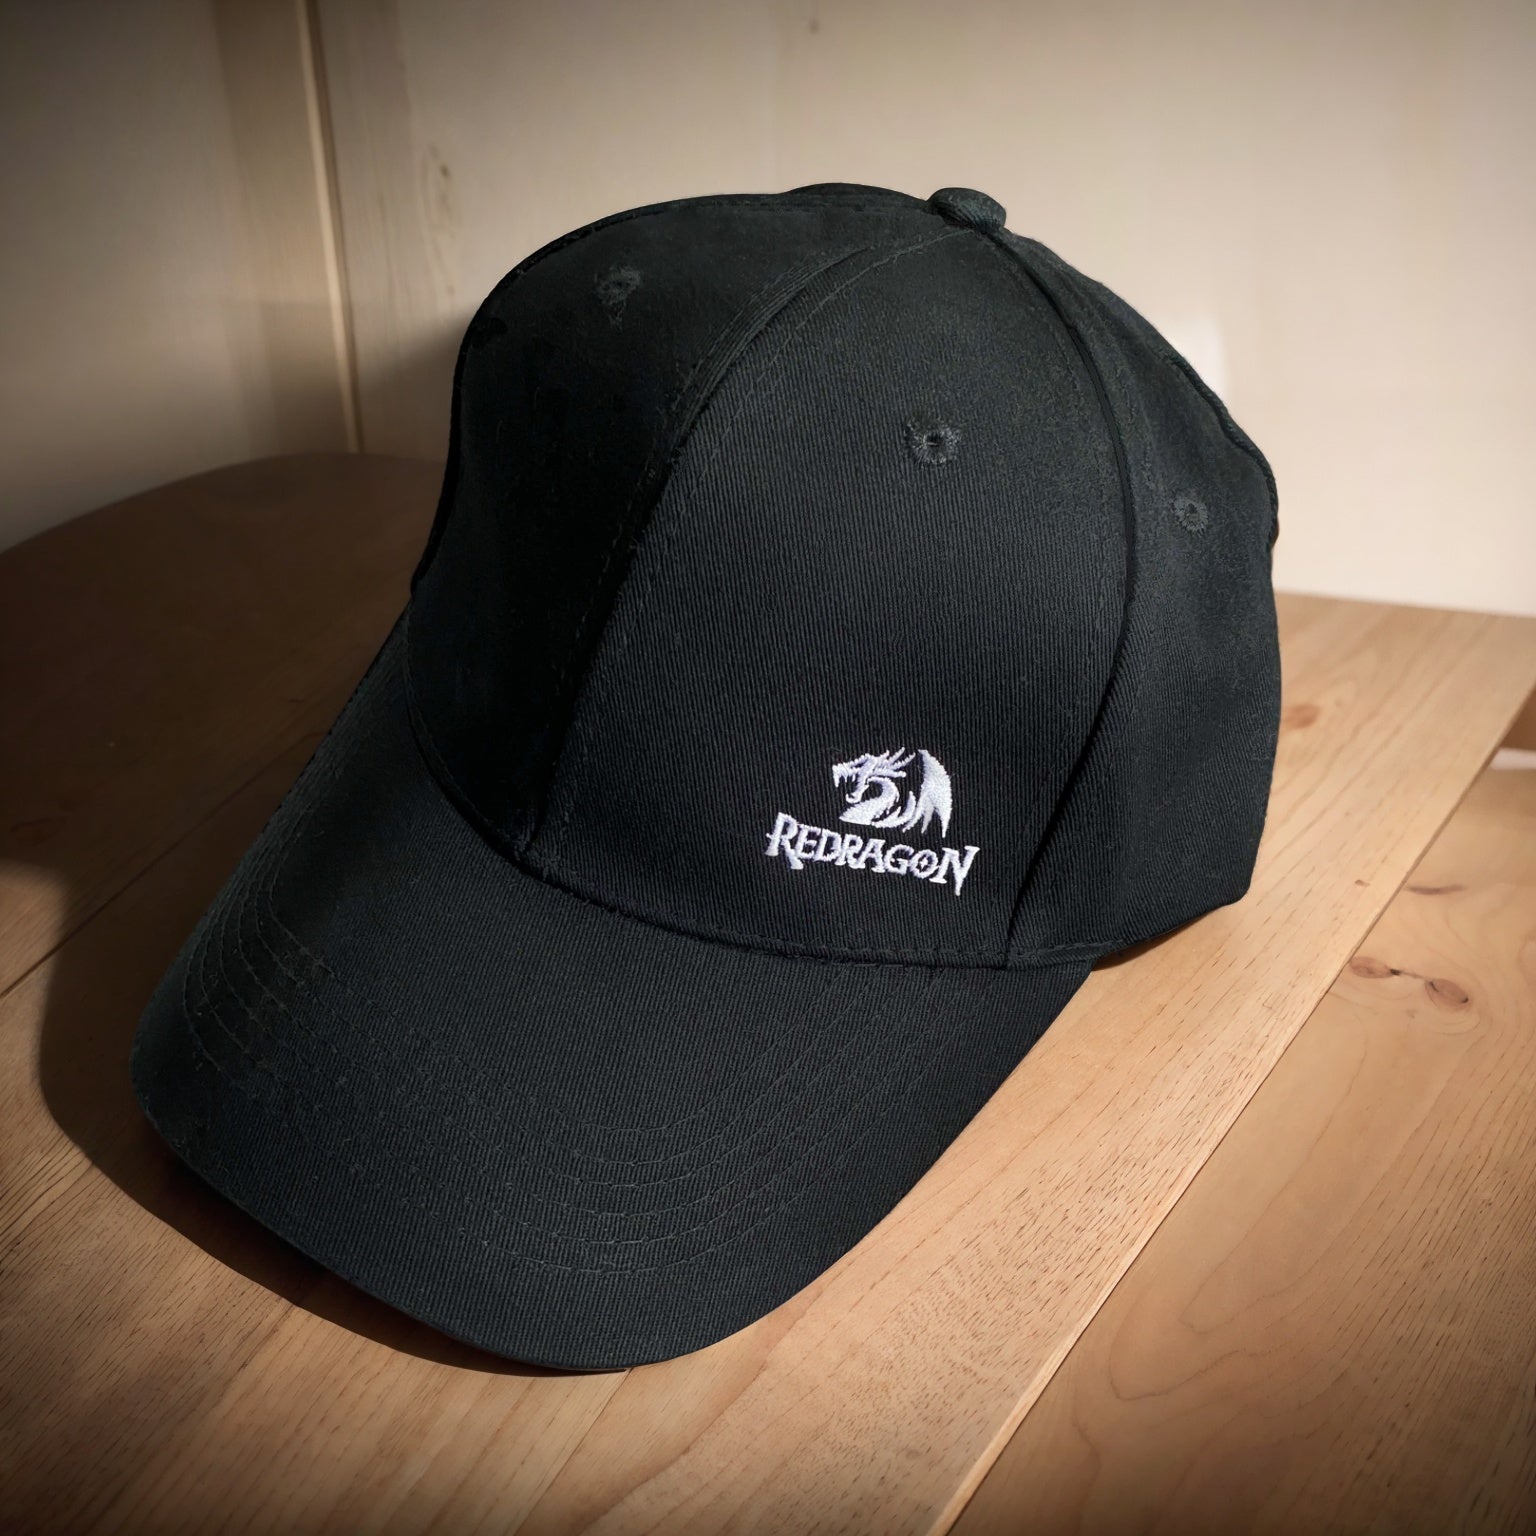 Redragon Premium Baseball Cap - Adjustable, Comfort Fit